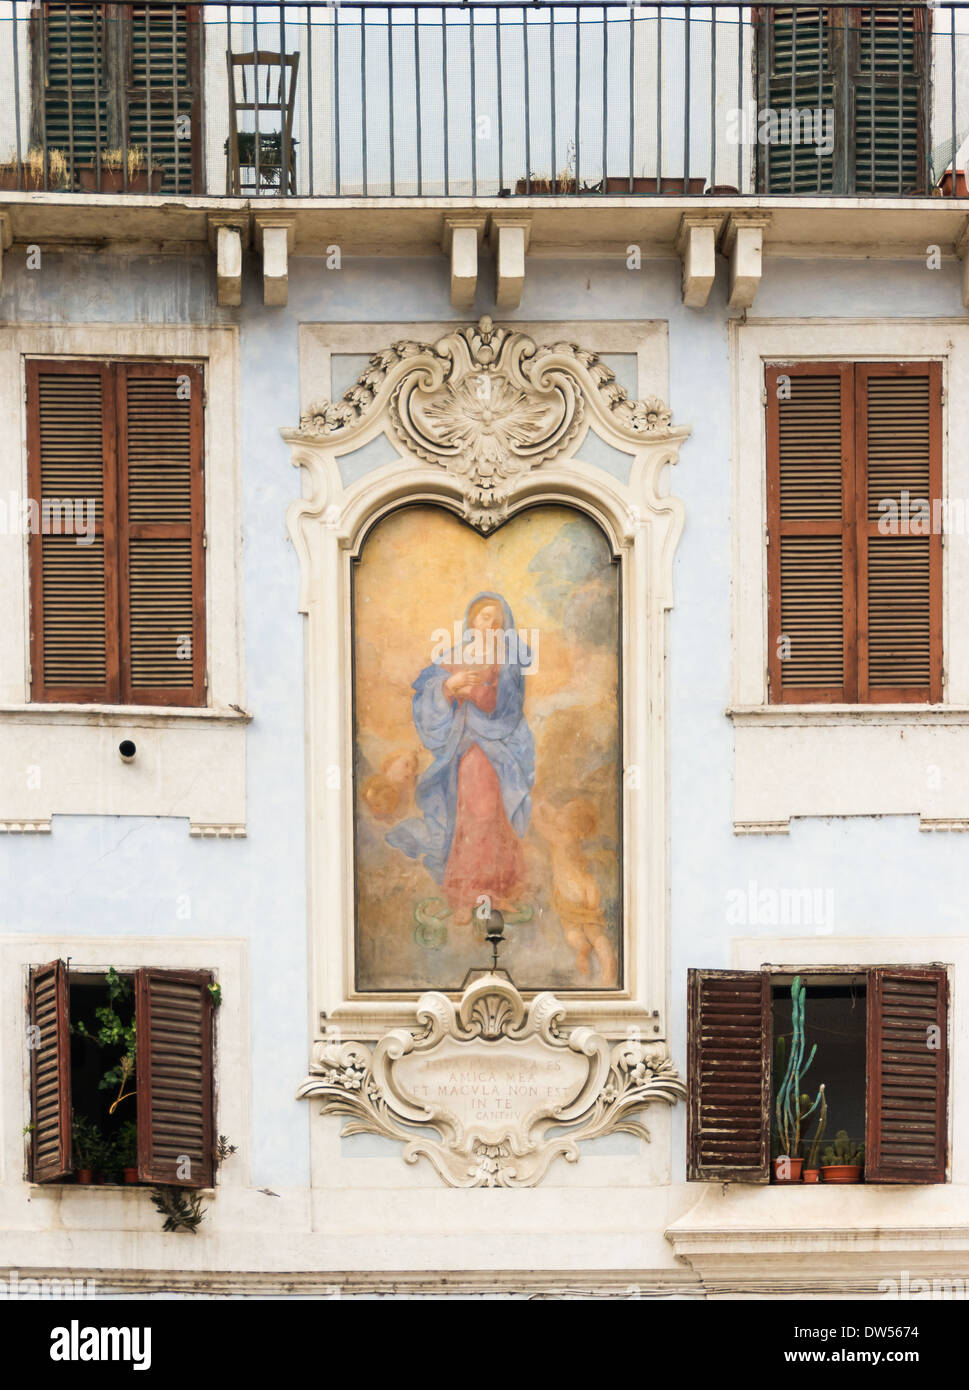 Detail of a facade, fresco of the Virgin Mary and the snake, piazza della Rotonda, Rome, Italy. Stock Photo